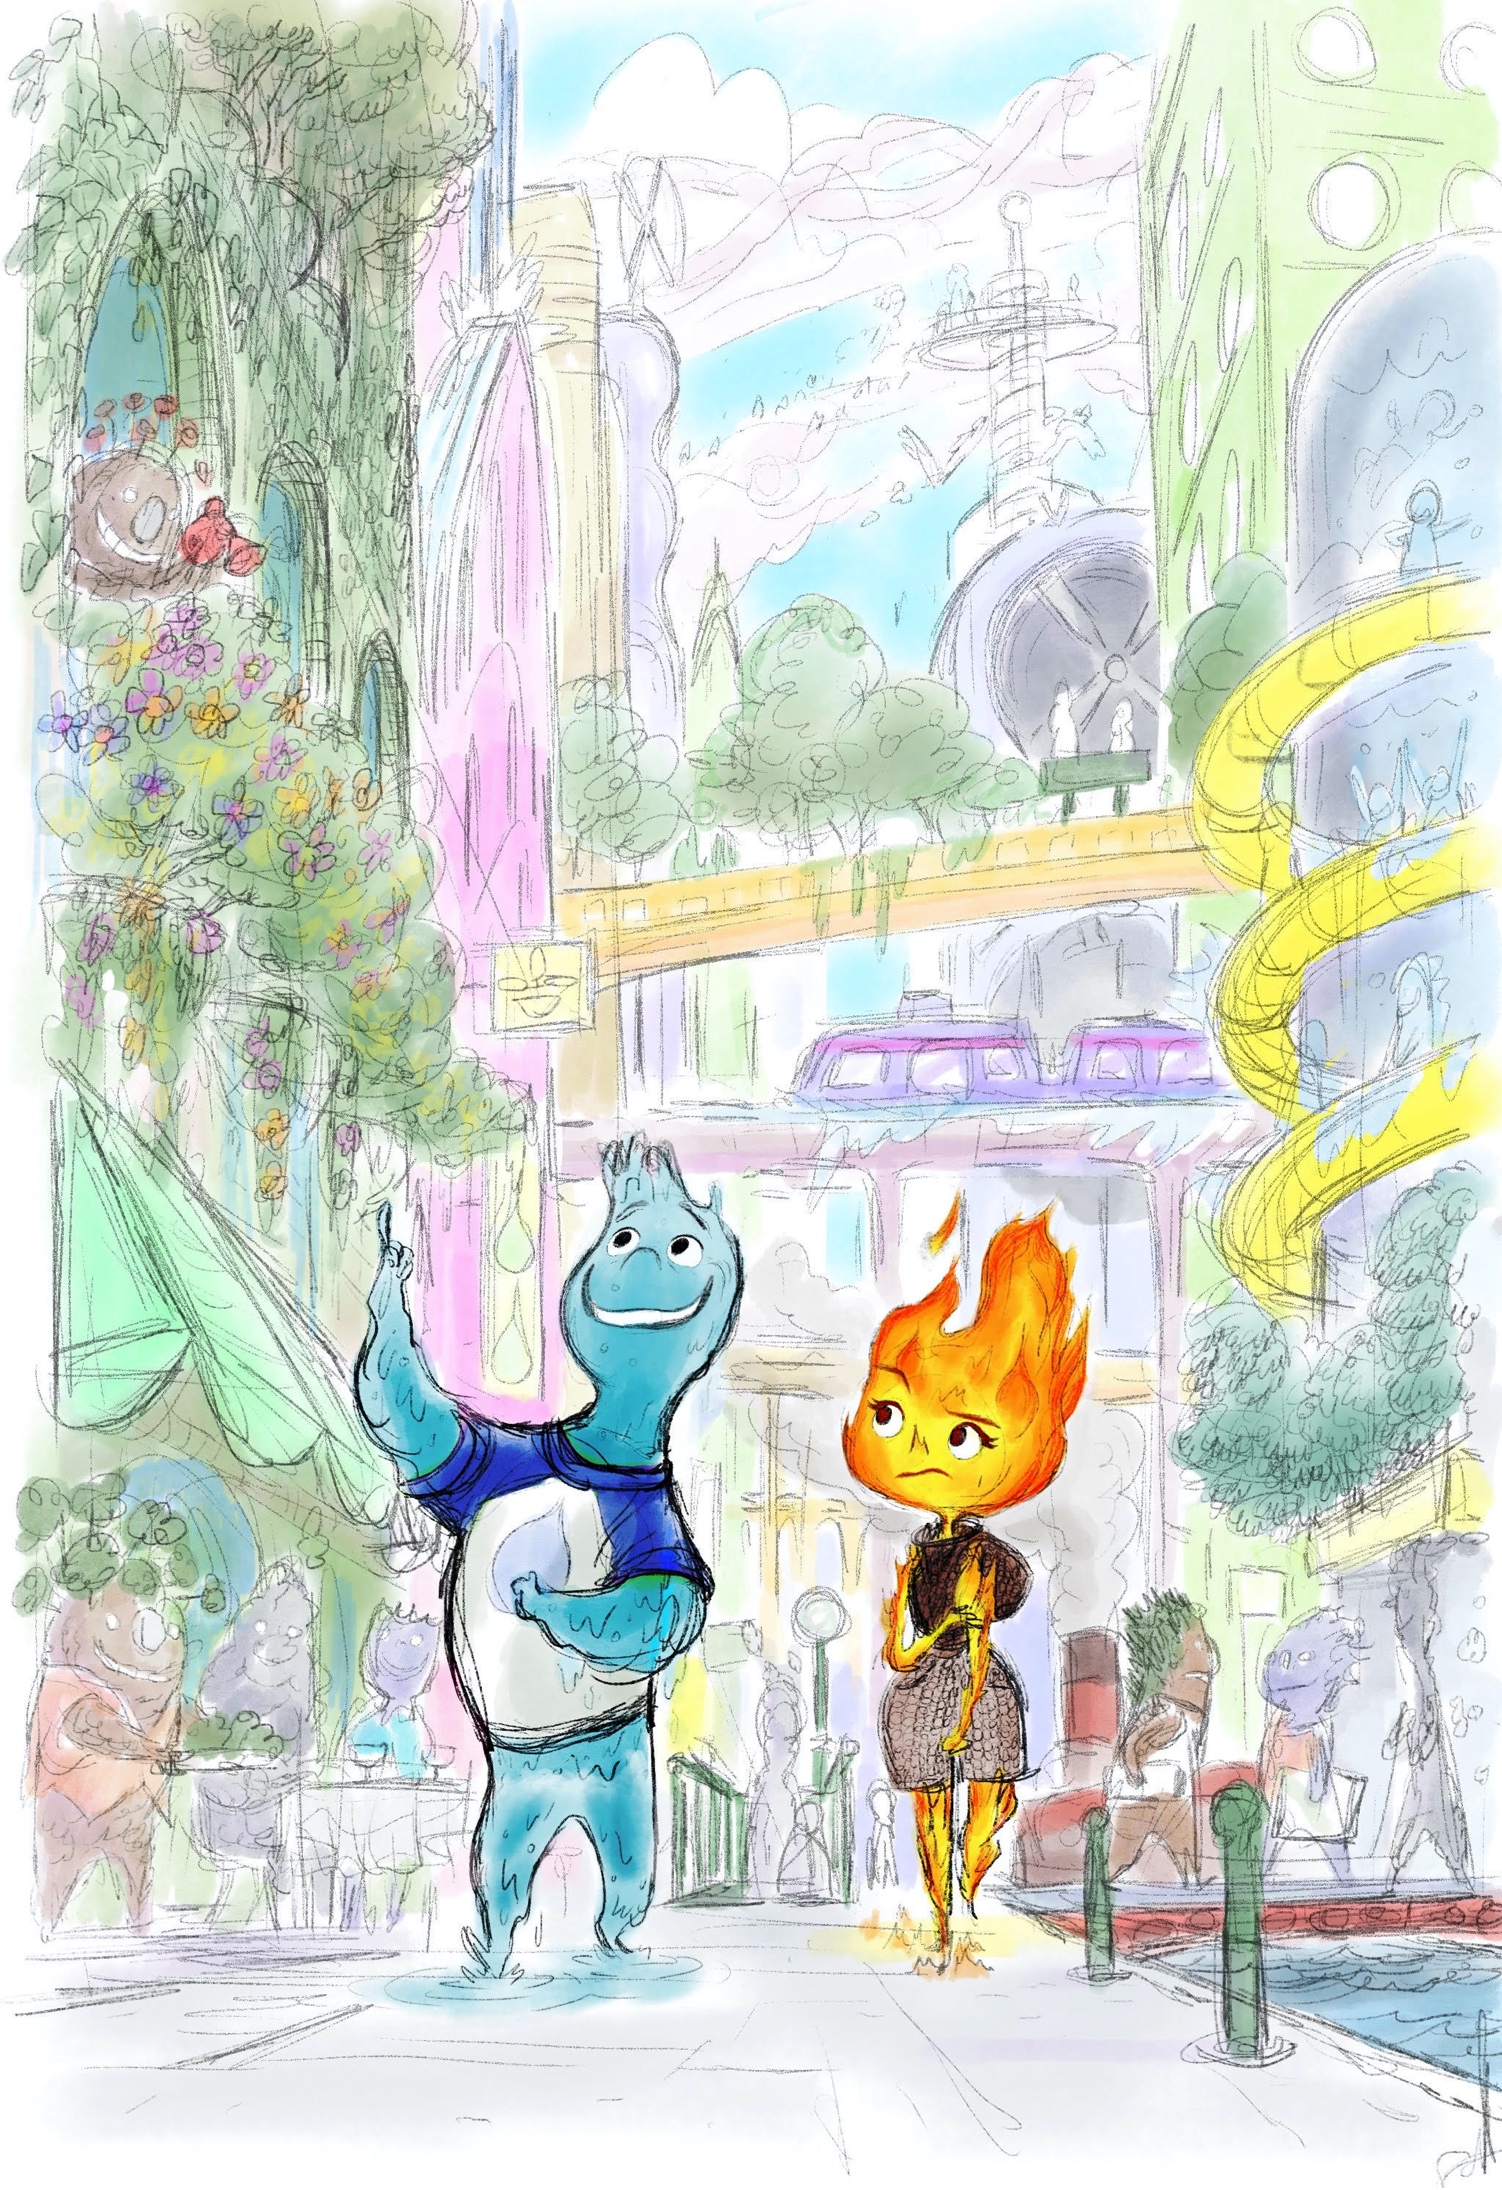 Fireboy & Watergirl 5: Elements - Water Temple Level (Walkthrough